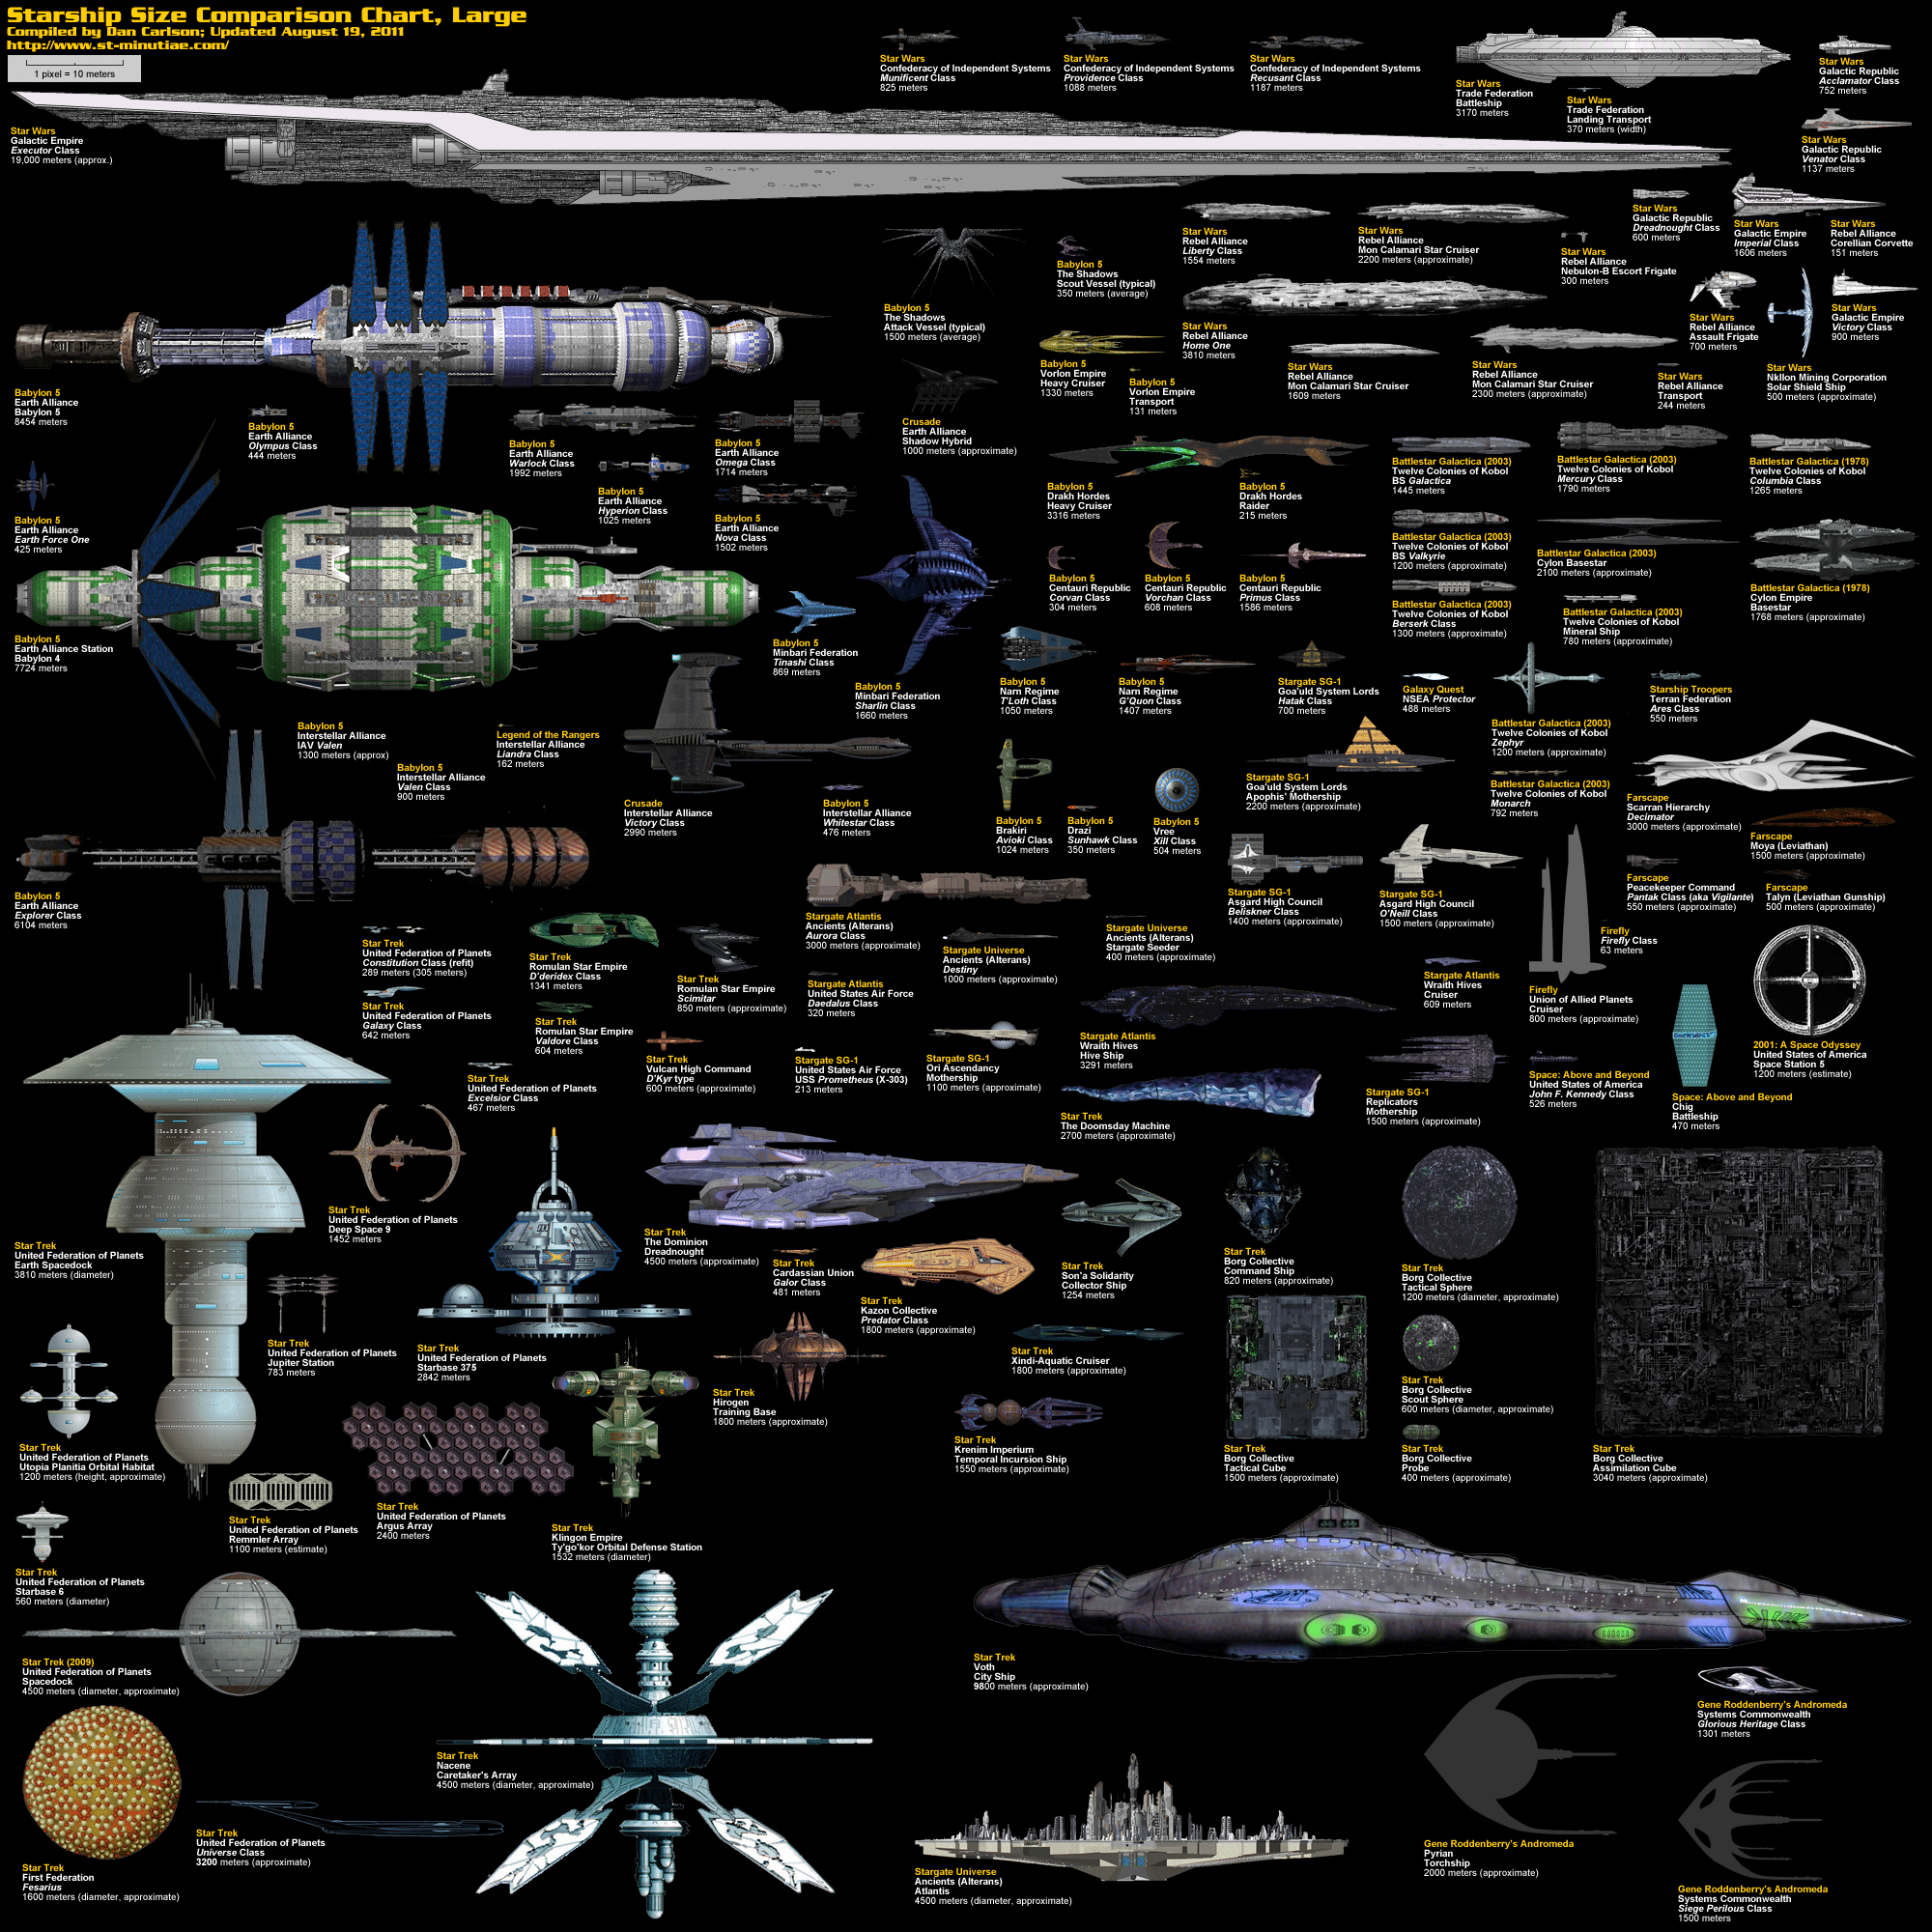 Science Fiction Spaceship Comparison Infographic